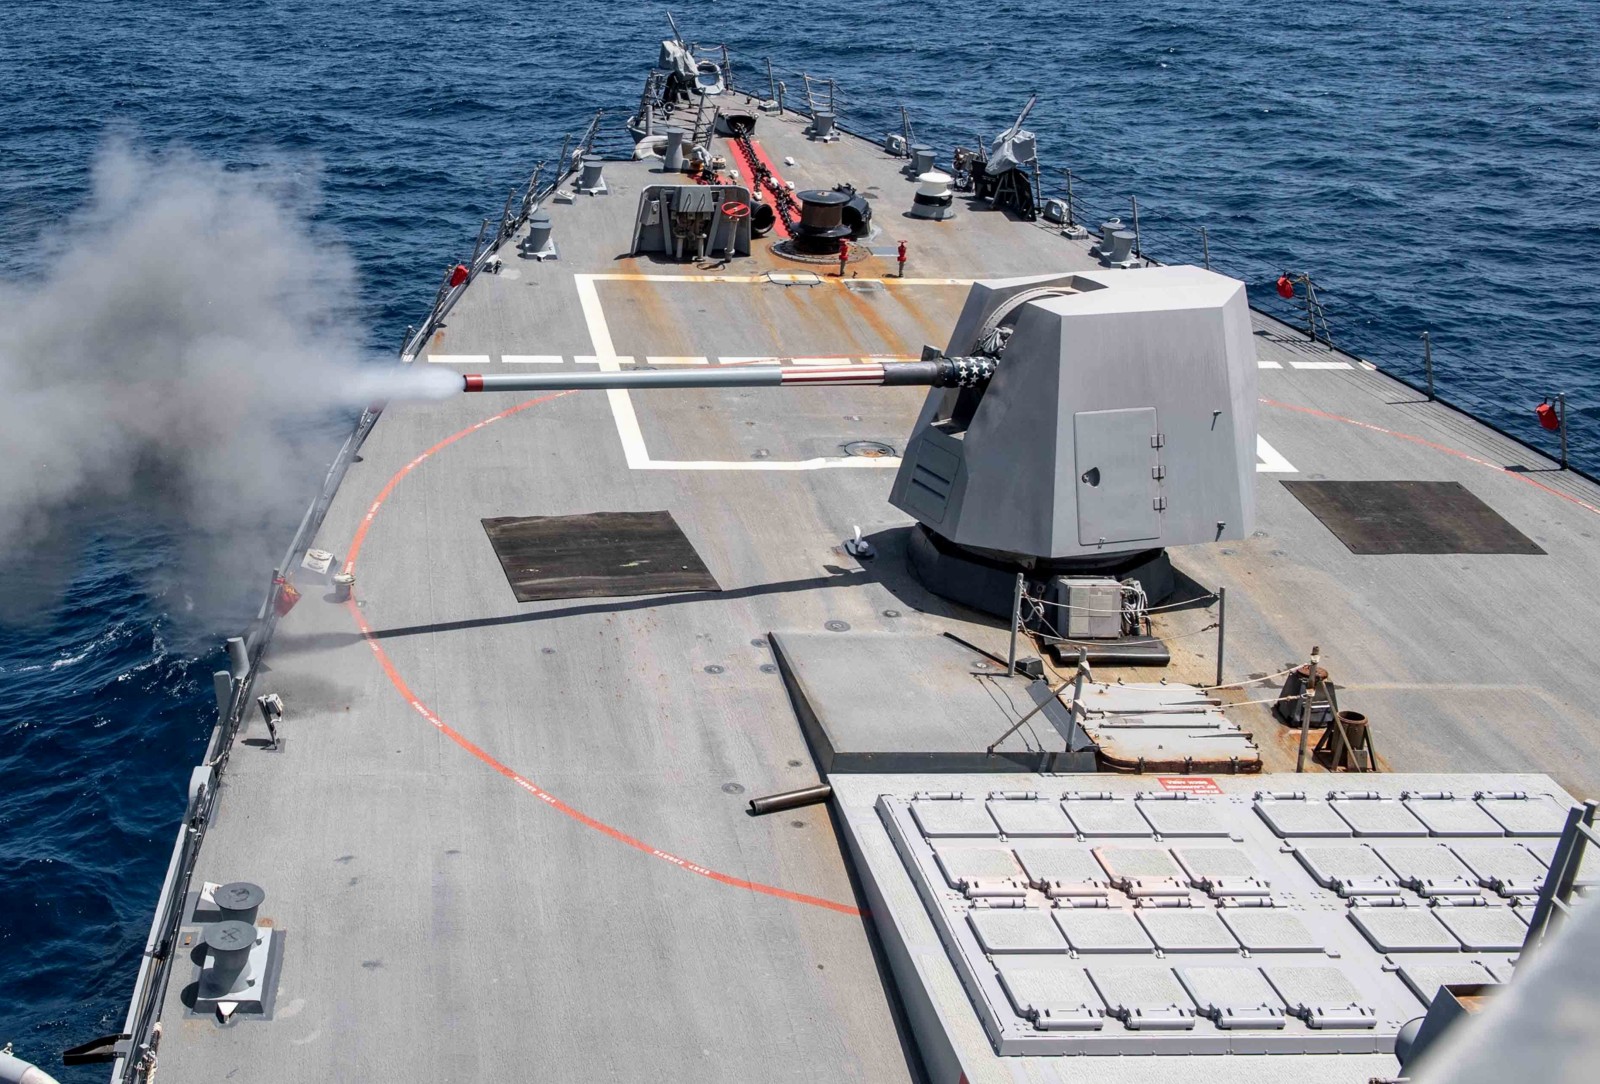 ddg-103 uss truxtun arleigh burke class guided missile destroyer aegis us navy gun fire arabian sea 81